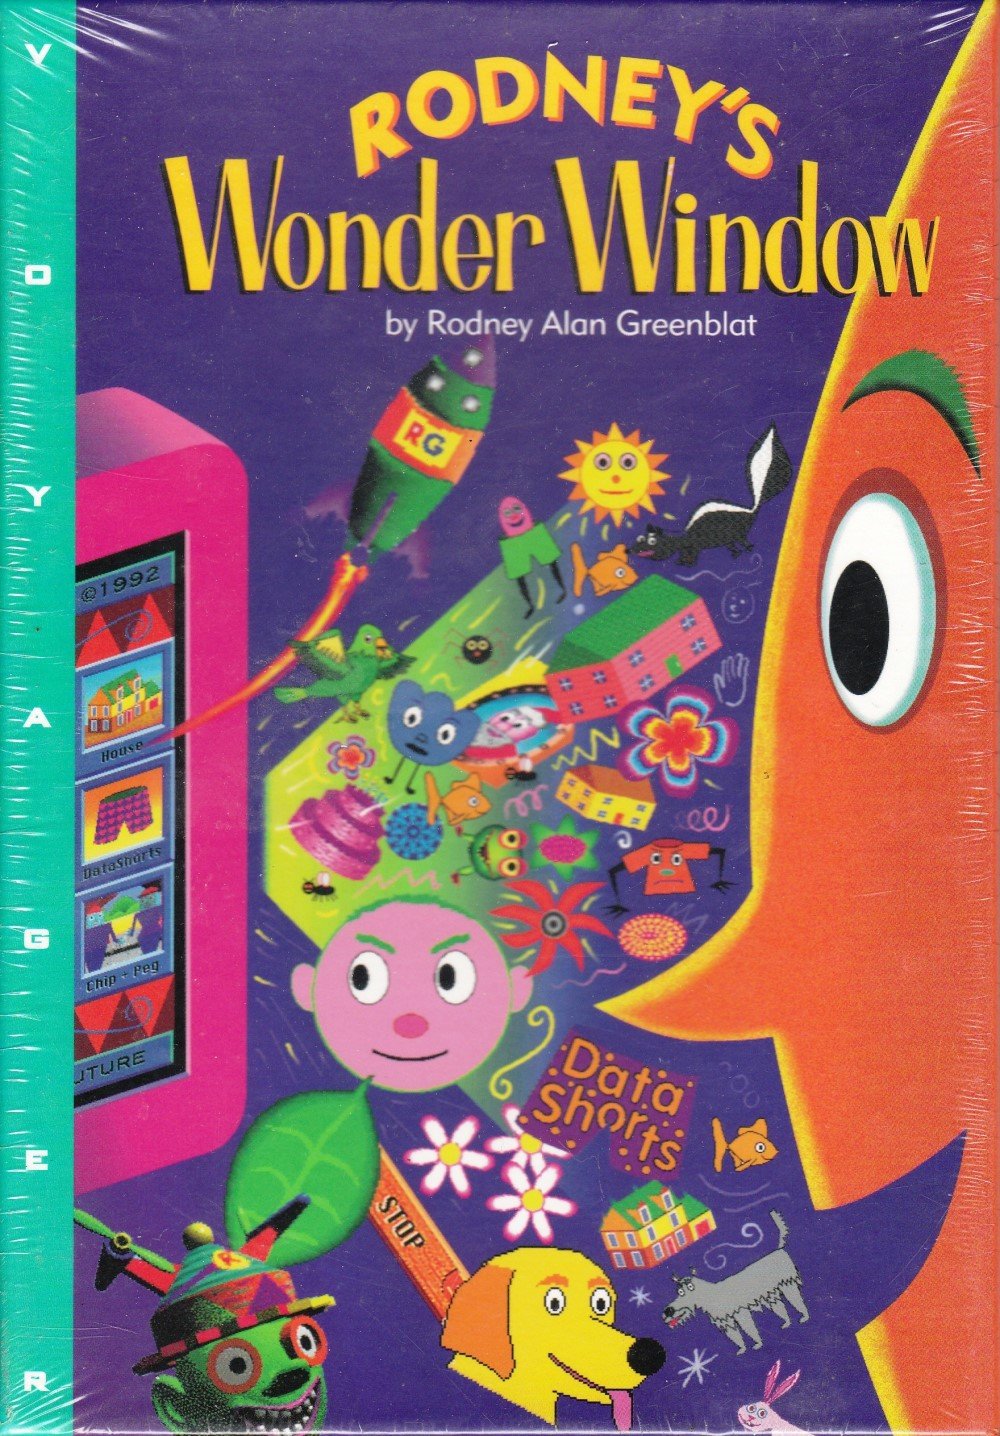 Rodney's Wonder Window